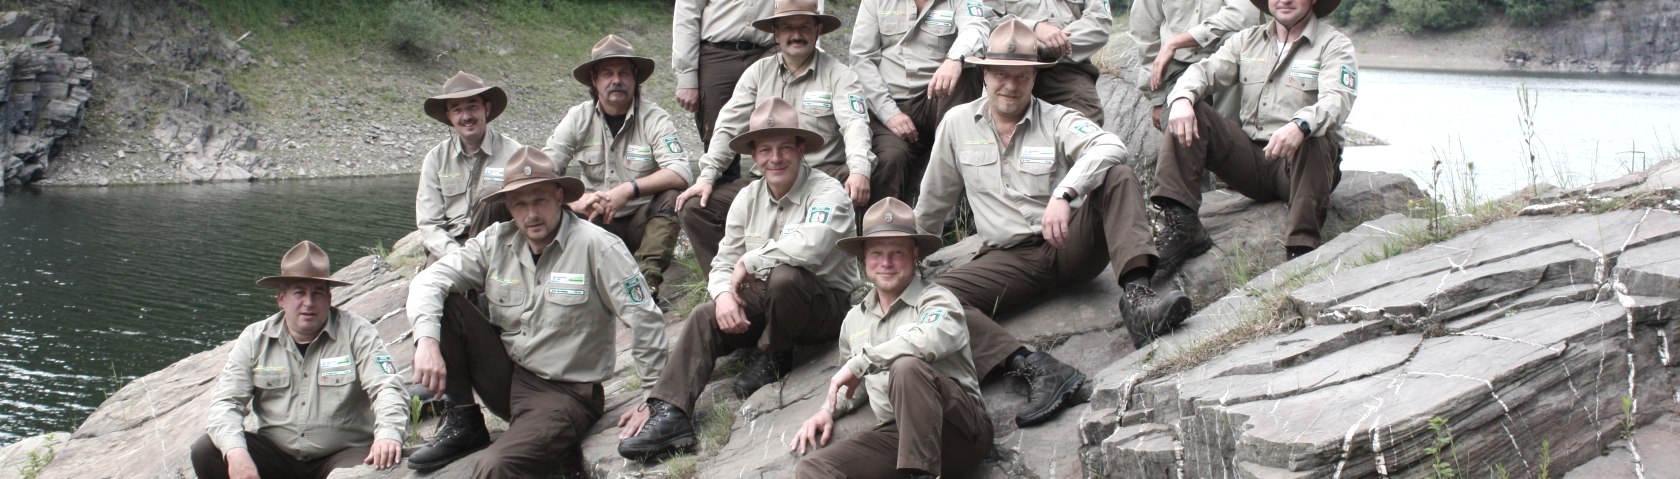    Gruppenbild Ranger II, © Nationalpark Eifel, M.Höller